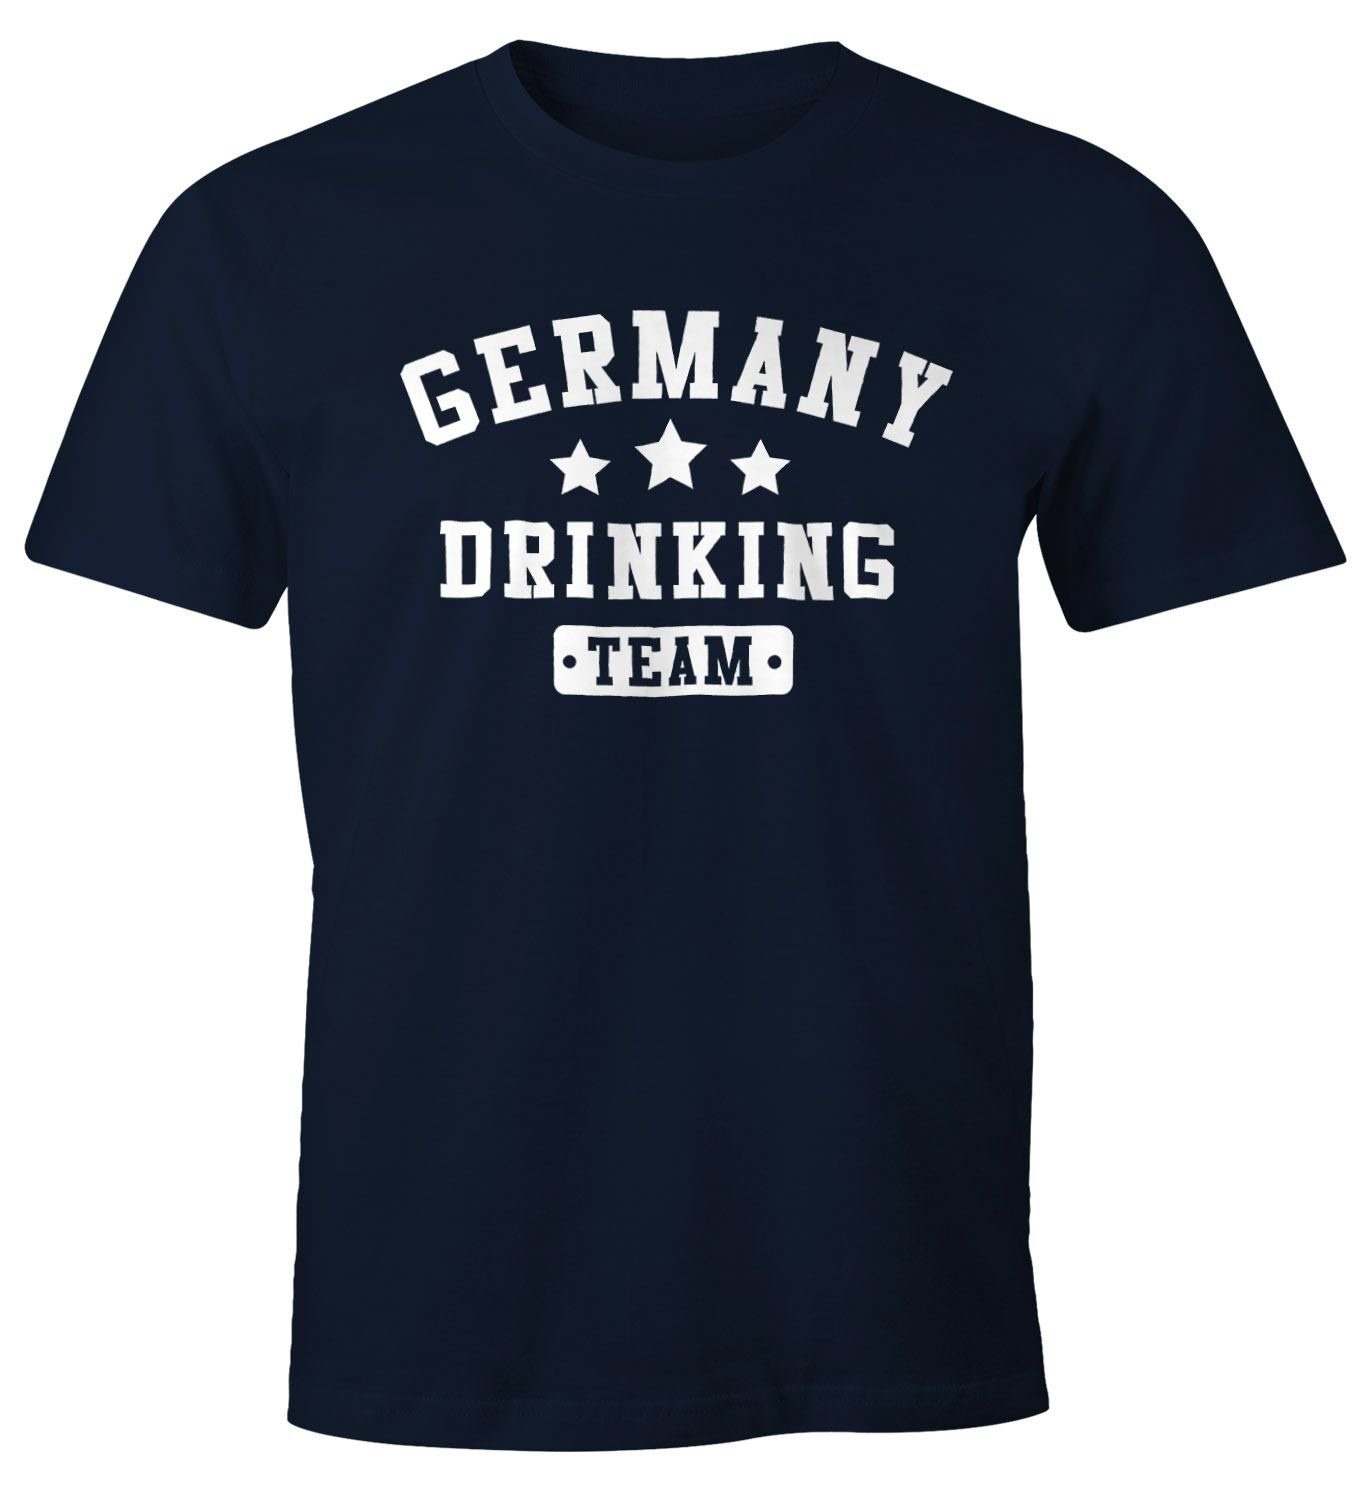 MoonWorks Print-Shirt Herren T-Shirt Print Fun-Shirt Moonworks® Germany Drinking Team Bier navy mit